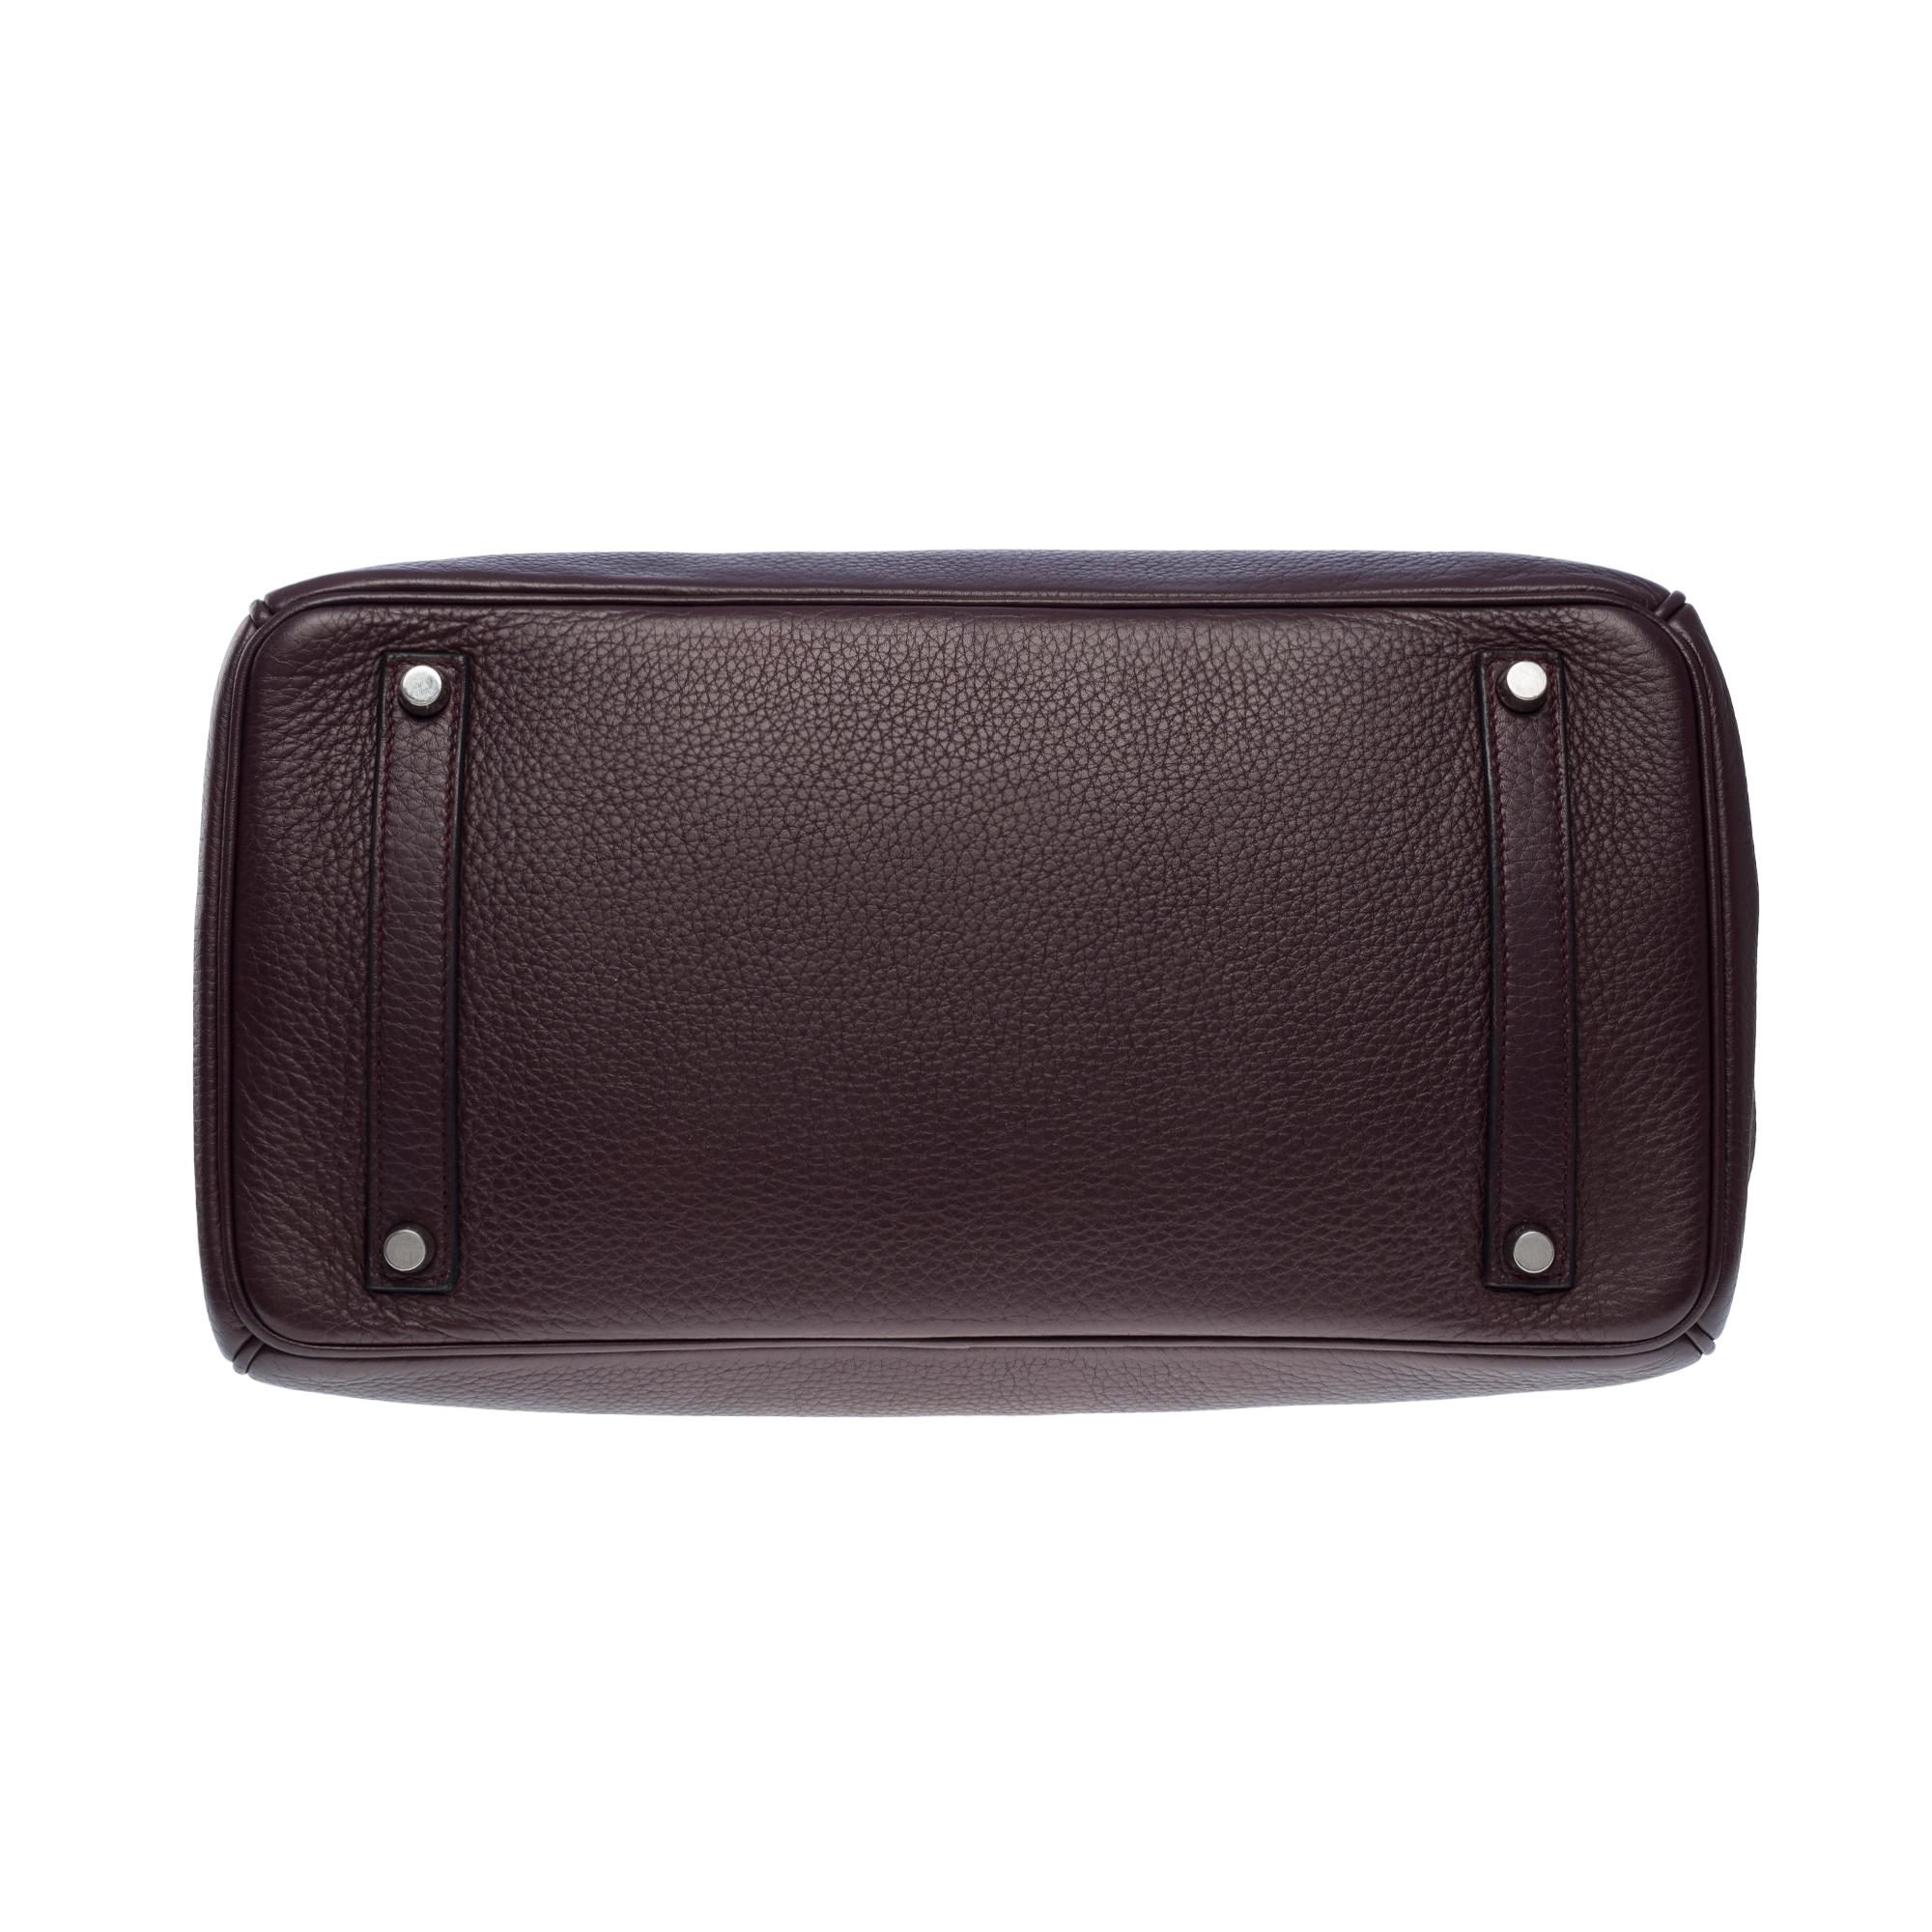 Amazing Hermès Birkin 35 handbag in Togo Raisin leather, SHW For Sale 6